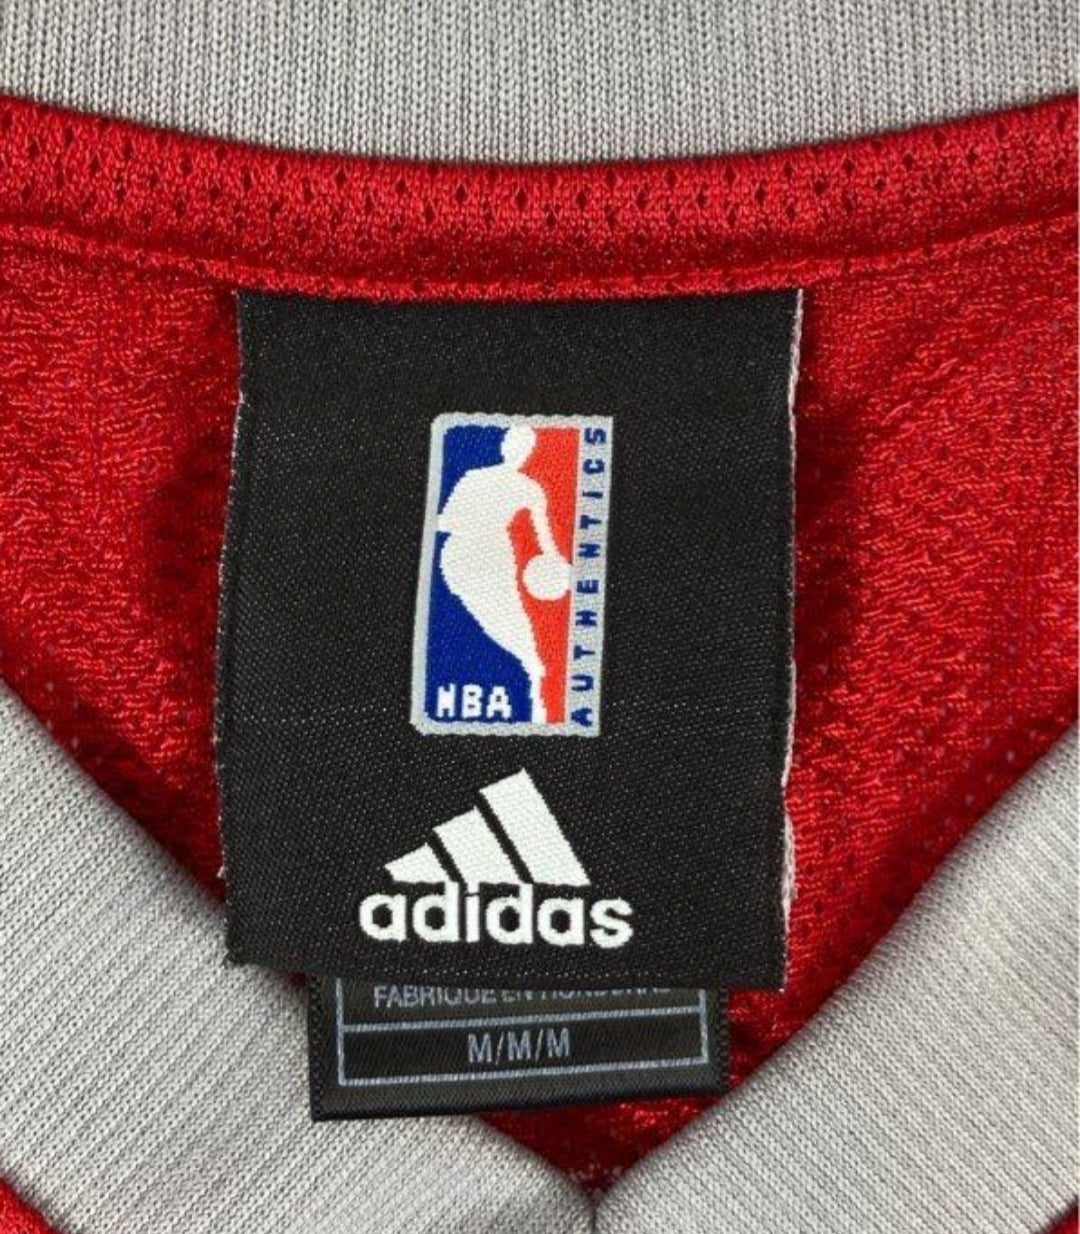 NBA *Adidas Houston Rockets 'Yao Ming' #11 Red Men's Jersey (Size Medium)